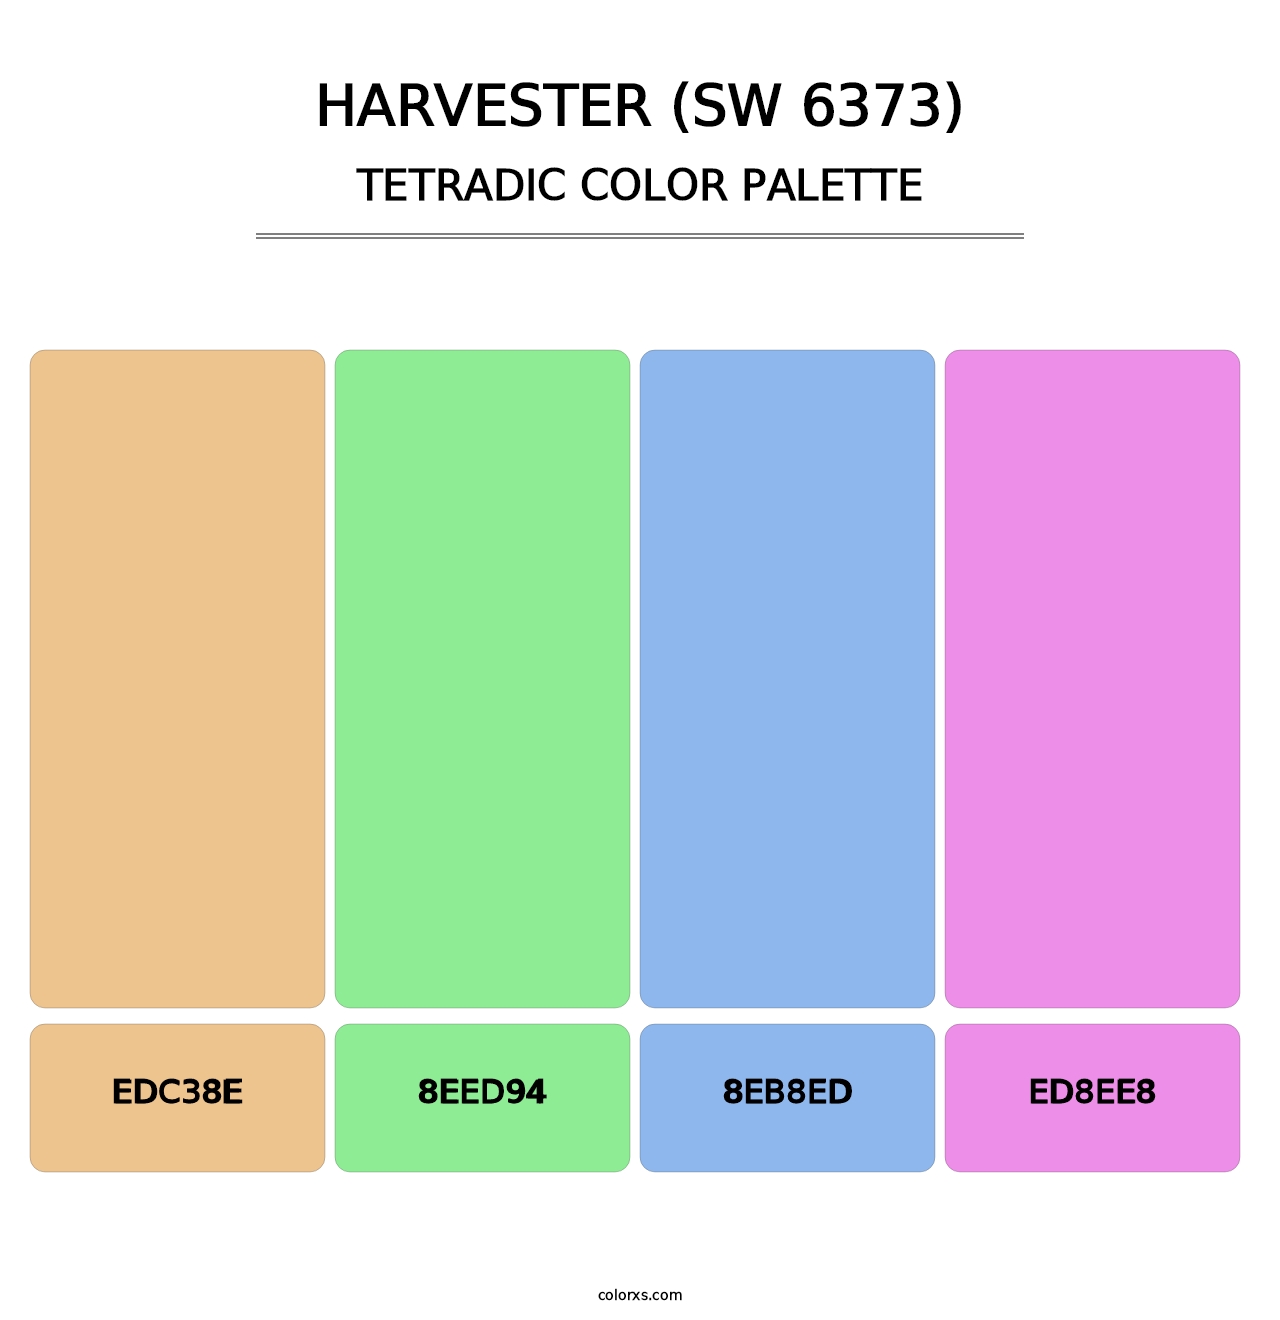 Harvester (SW 6373) - Tetradic Color Palette